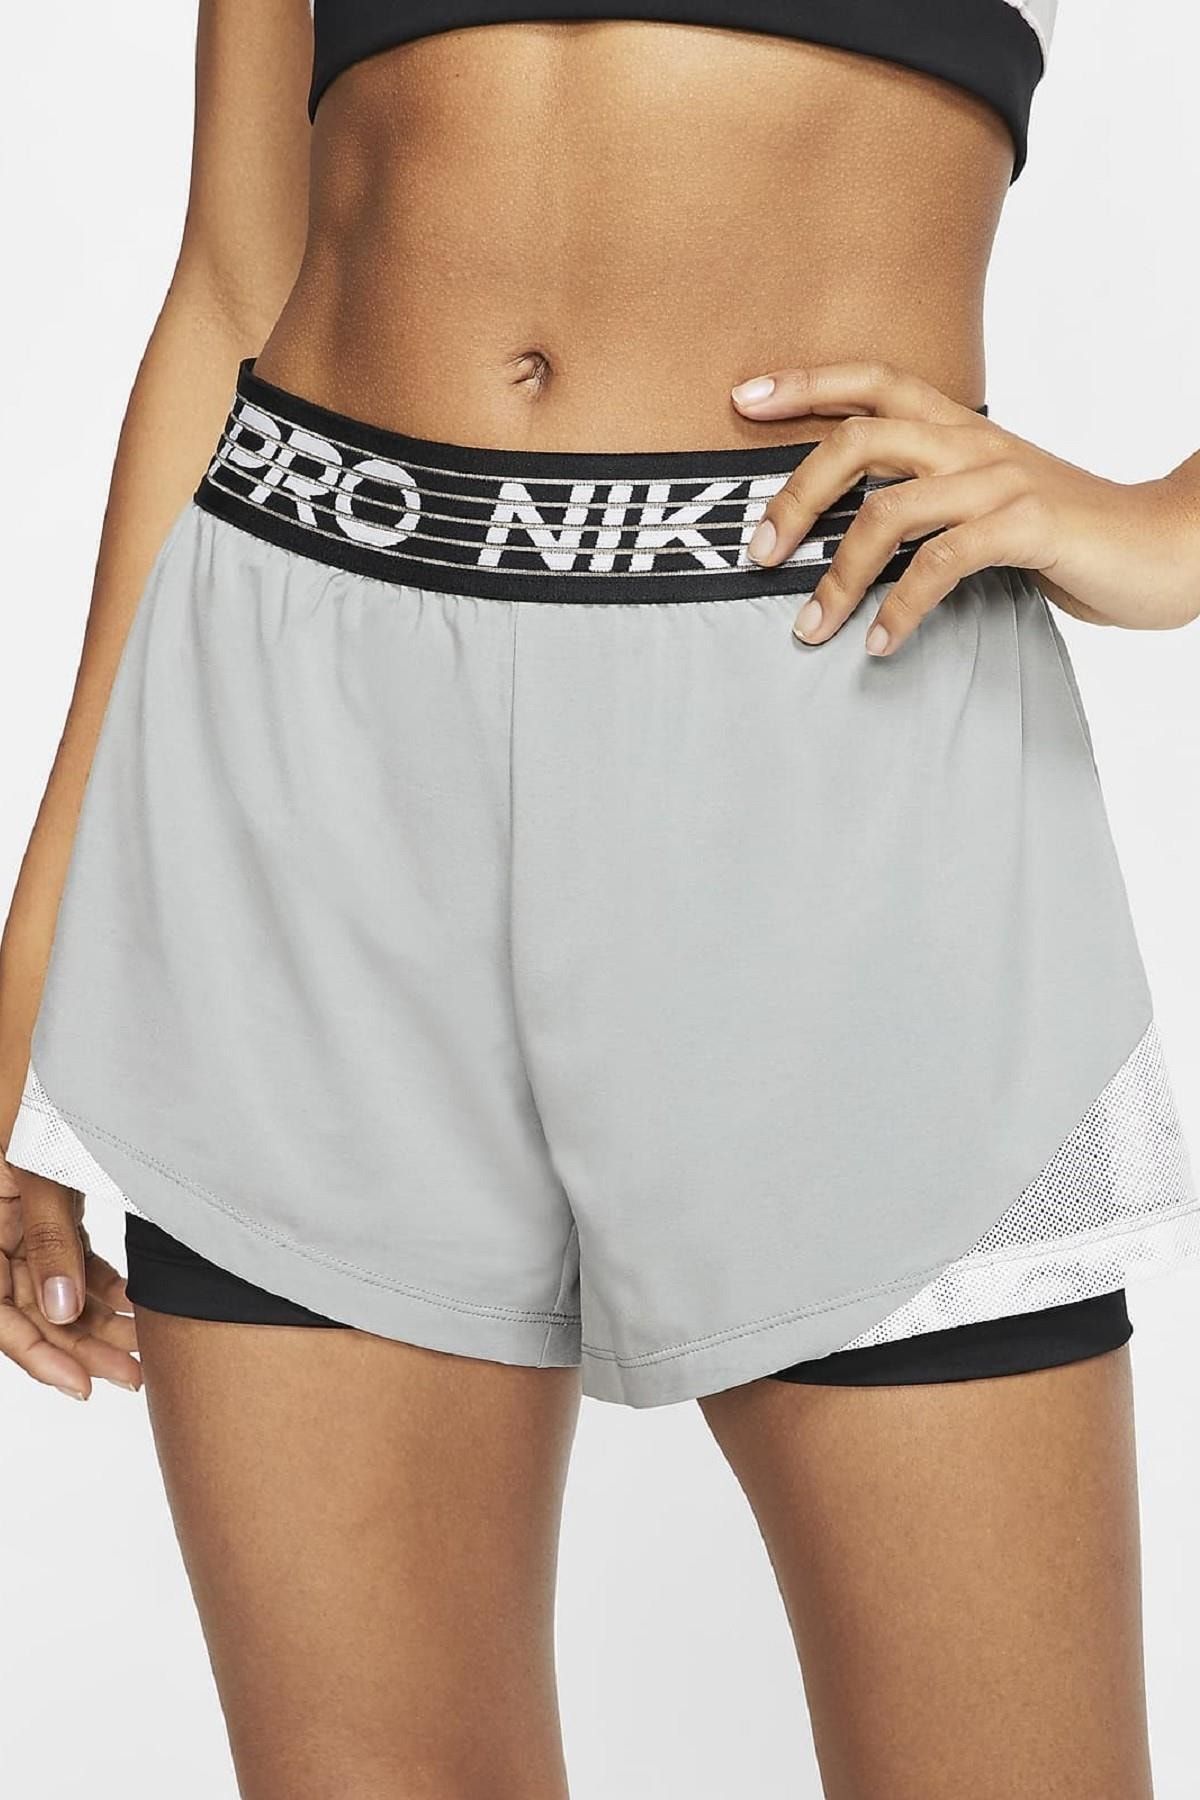 Nike Pro Flex 2 In 1 İkisi Bir Arada Taytlı Kısa Şort Gri Siyah